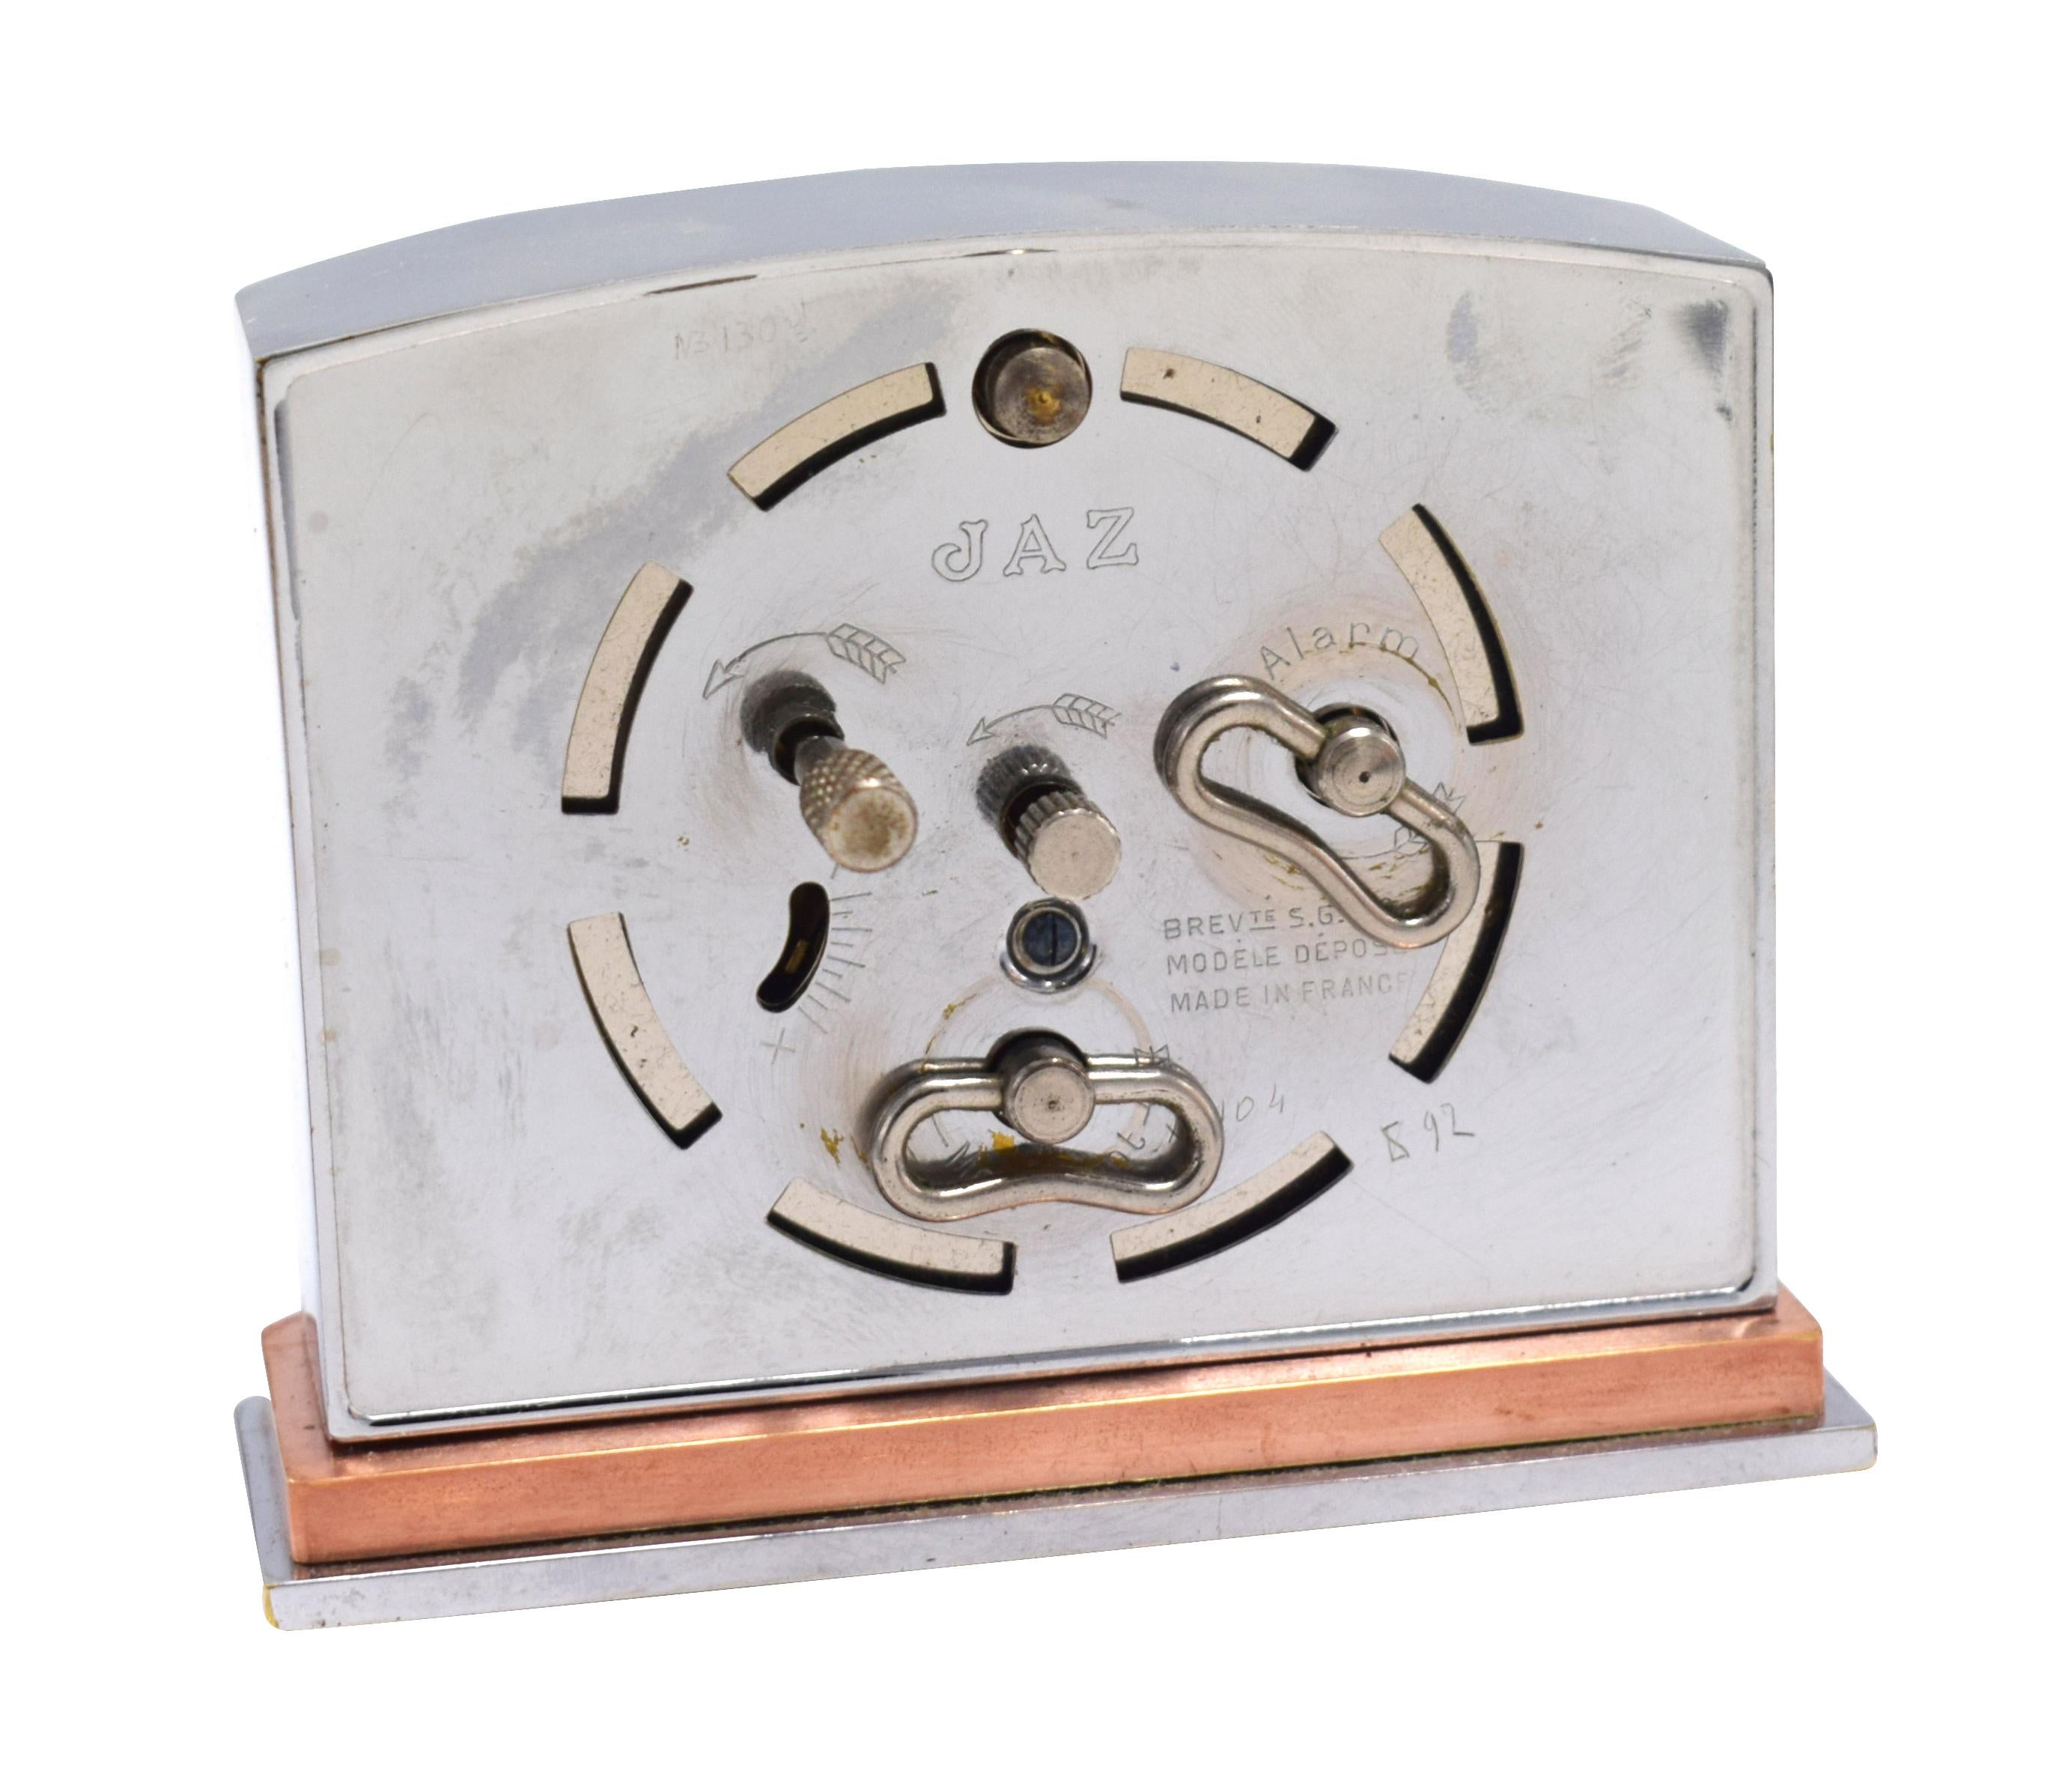 20th Century French Art Deco Alarm Clock by JAZ, circa 1935